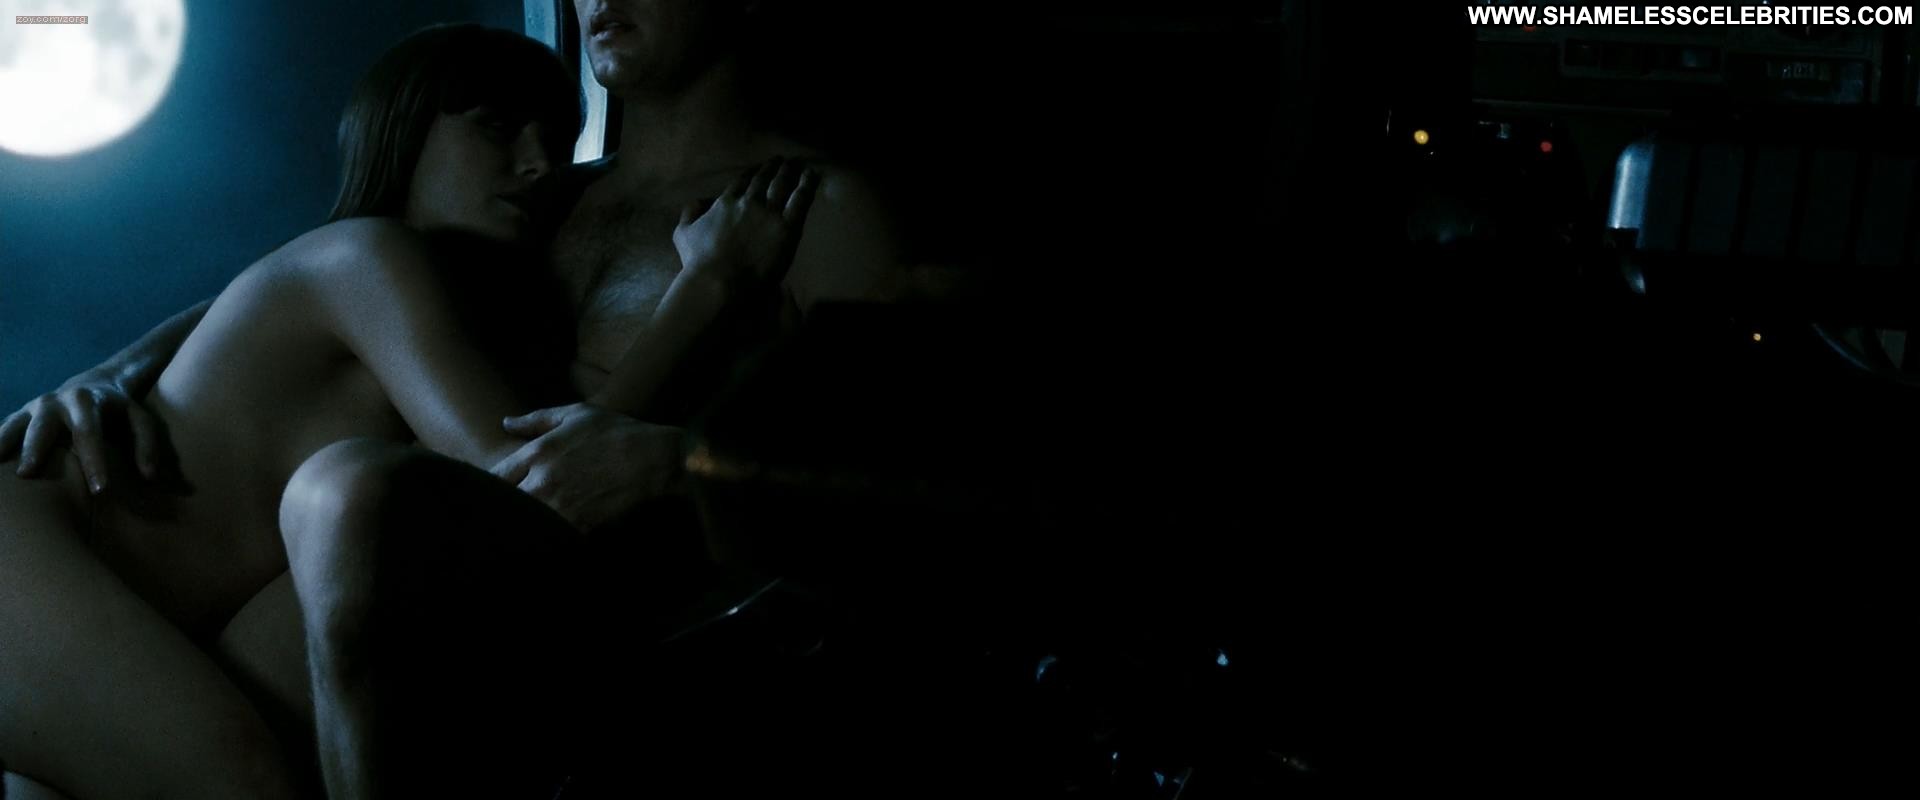 Watchmen Carla Gugino Nude Celebrity Topless Posing Hot Hot.